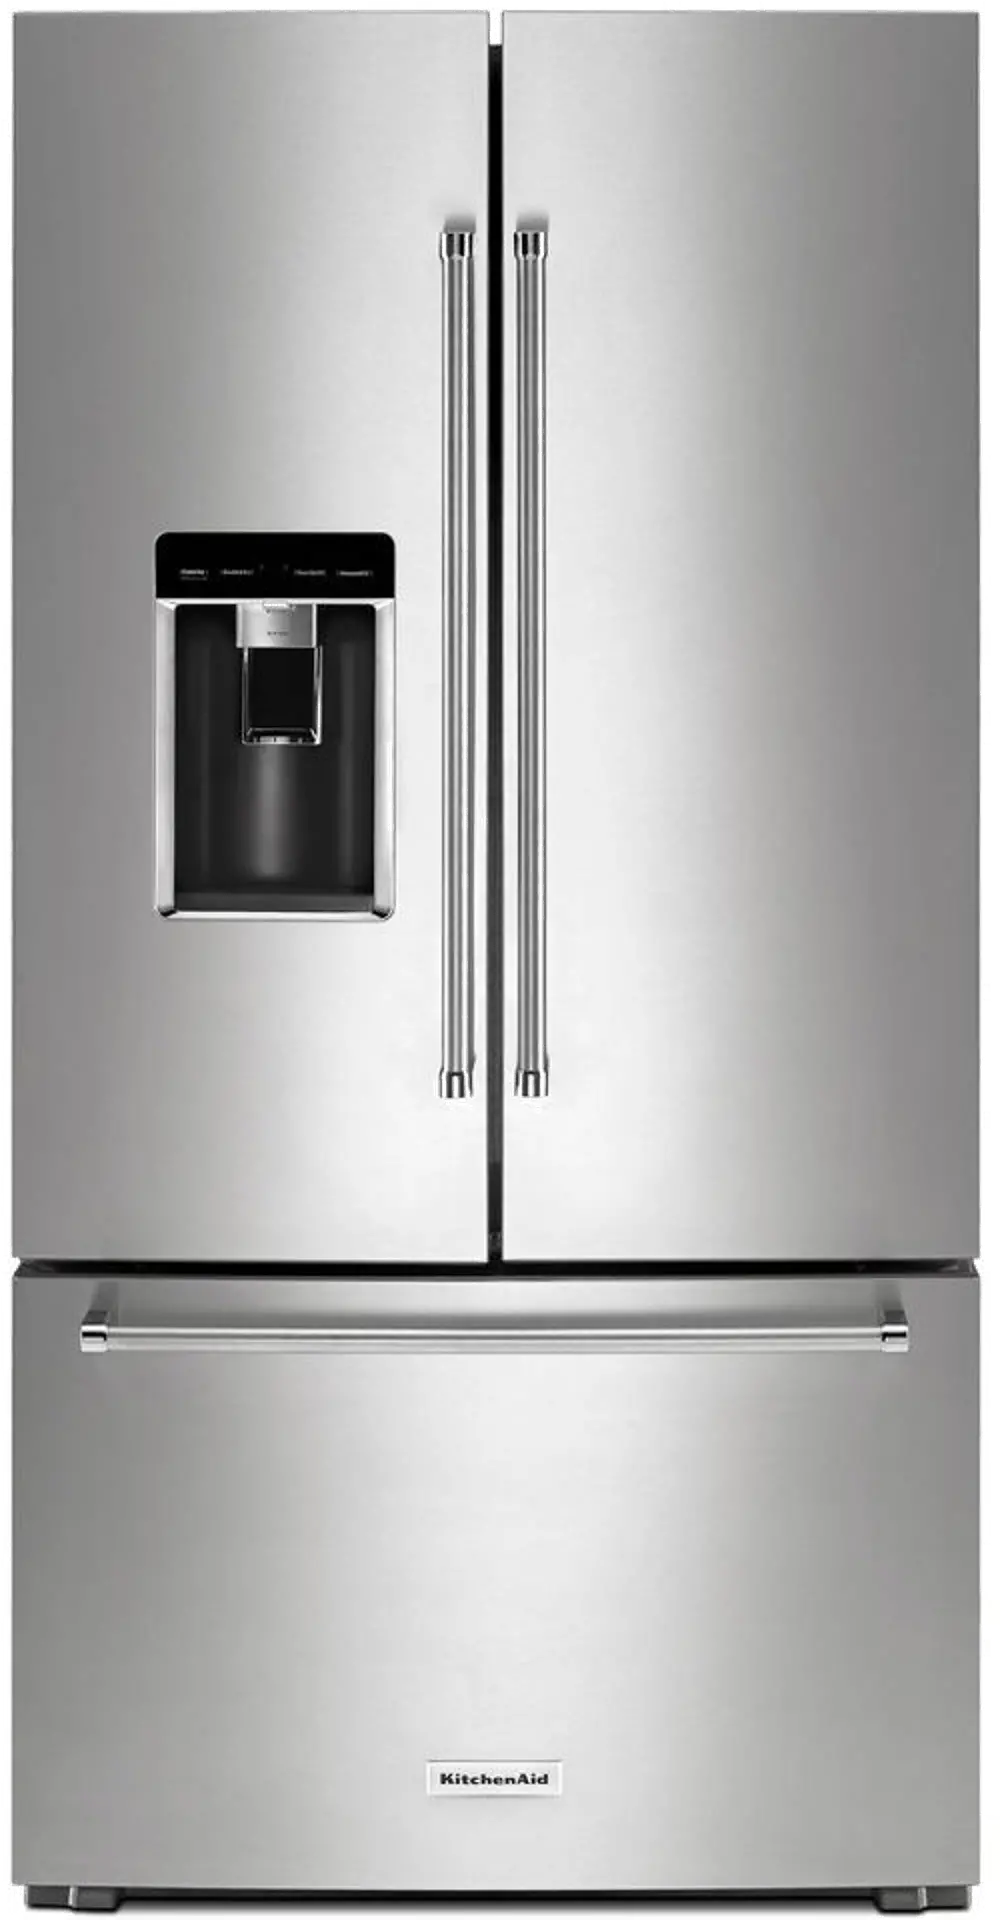 KRFC704FPS KitchenAid 23.8 cu ft French Door Refrigerator - Counter Depth Stainless Steel-1